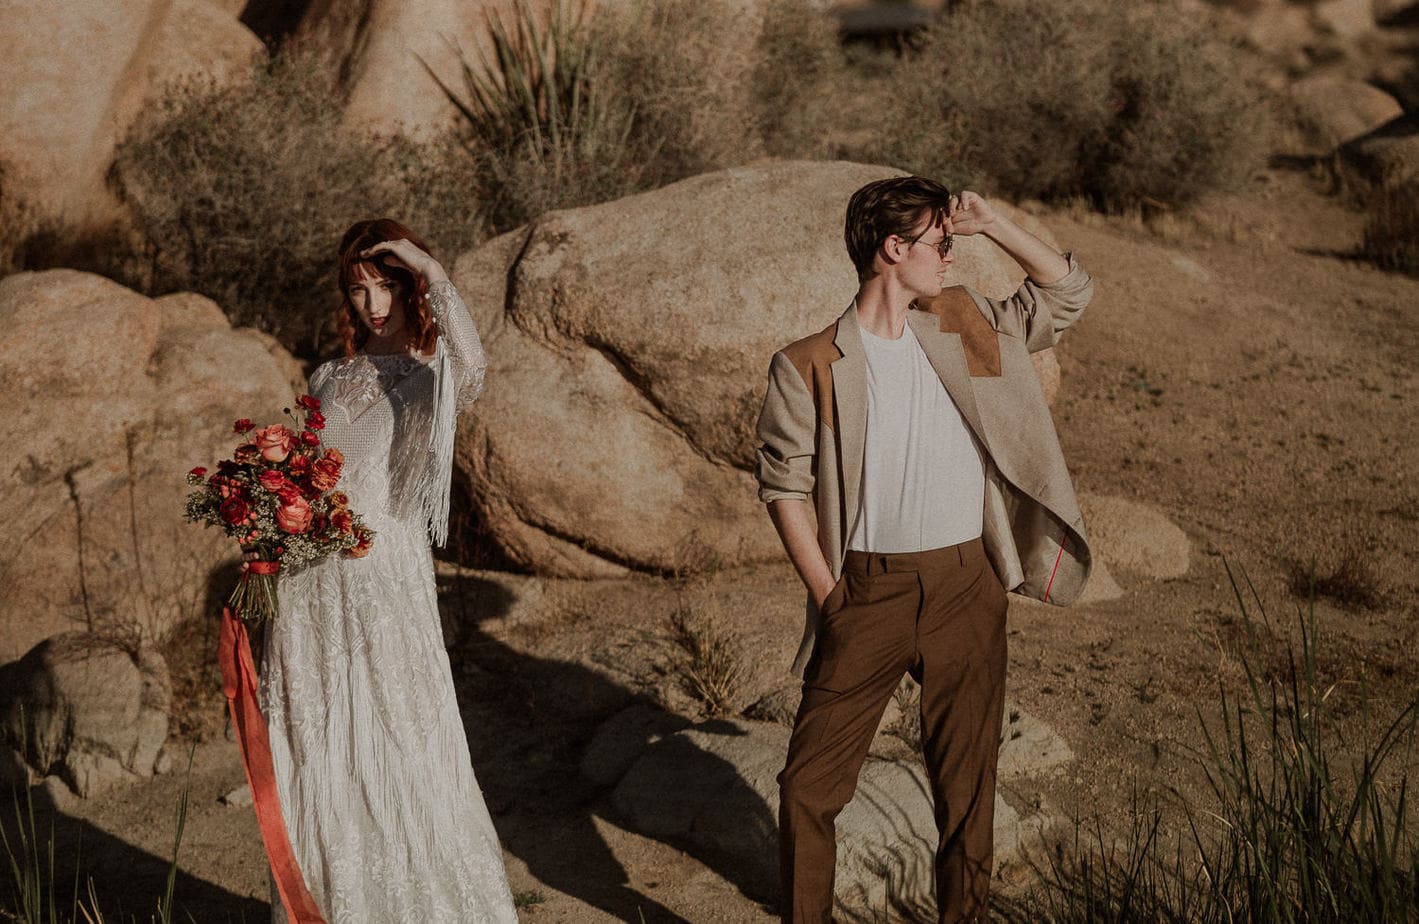 Boho Oregon elopement with fringe bridal dress in the PNW desert.